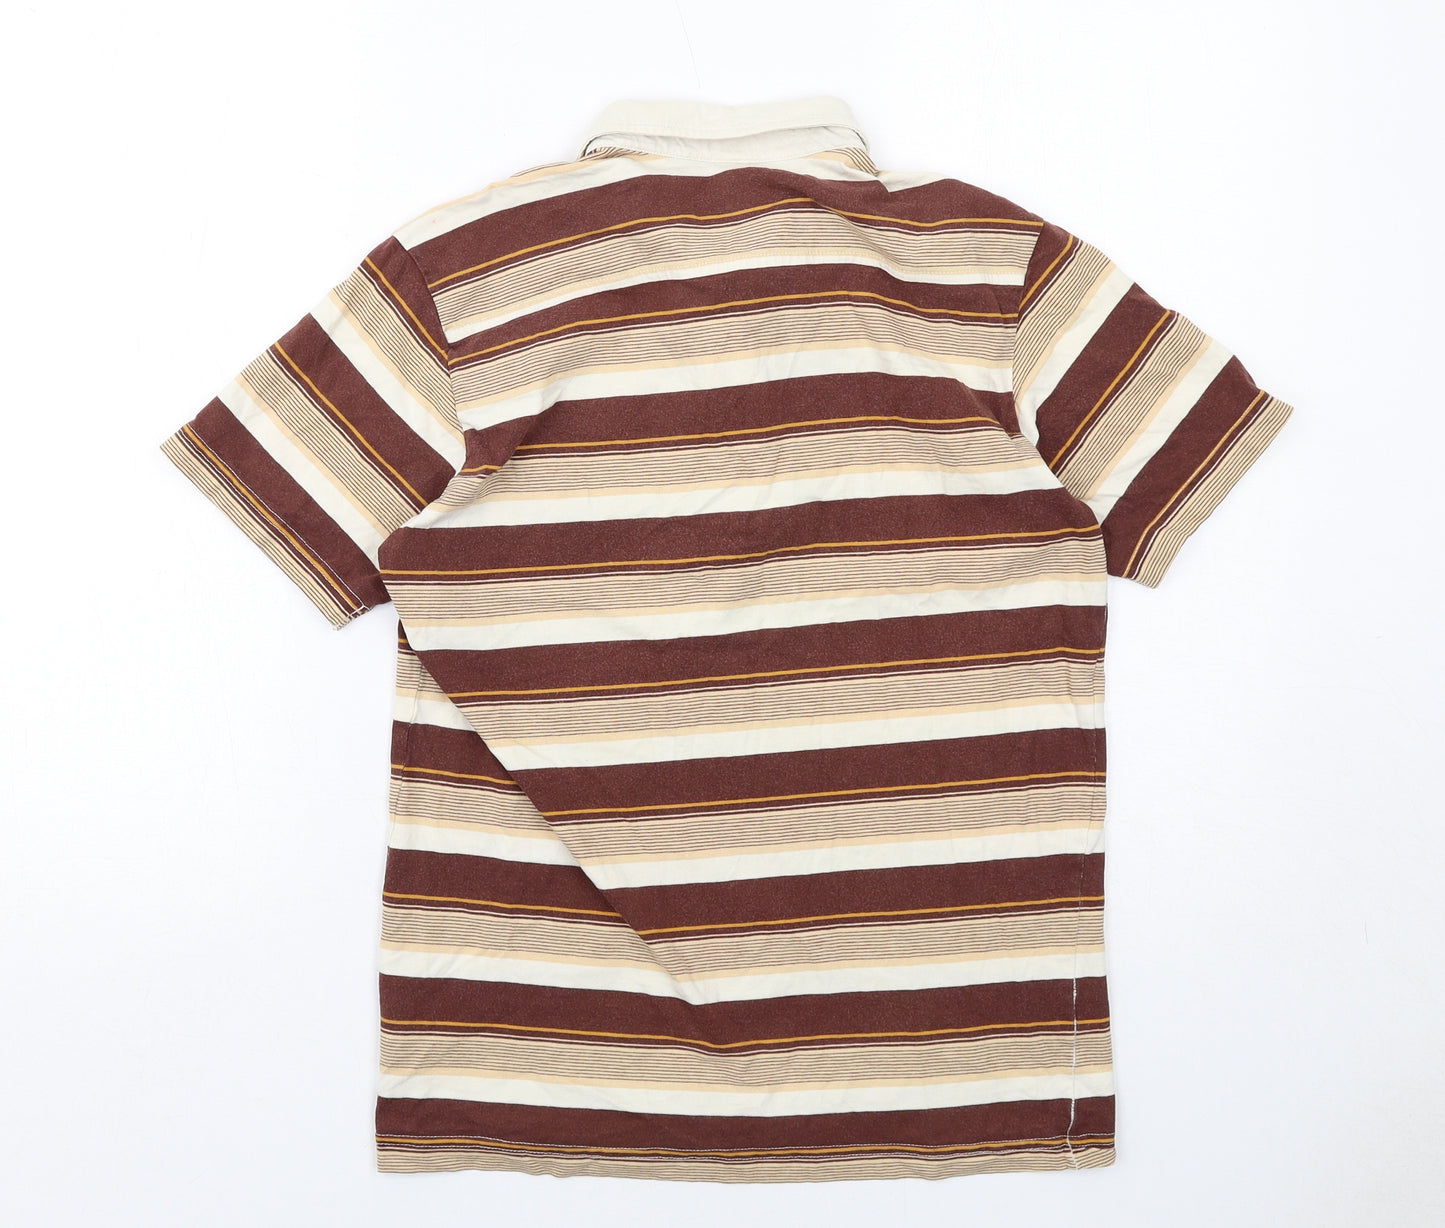 H&M Mens Brown Striped Cotton Polo Size M Collared Button